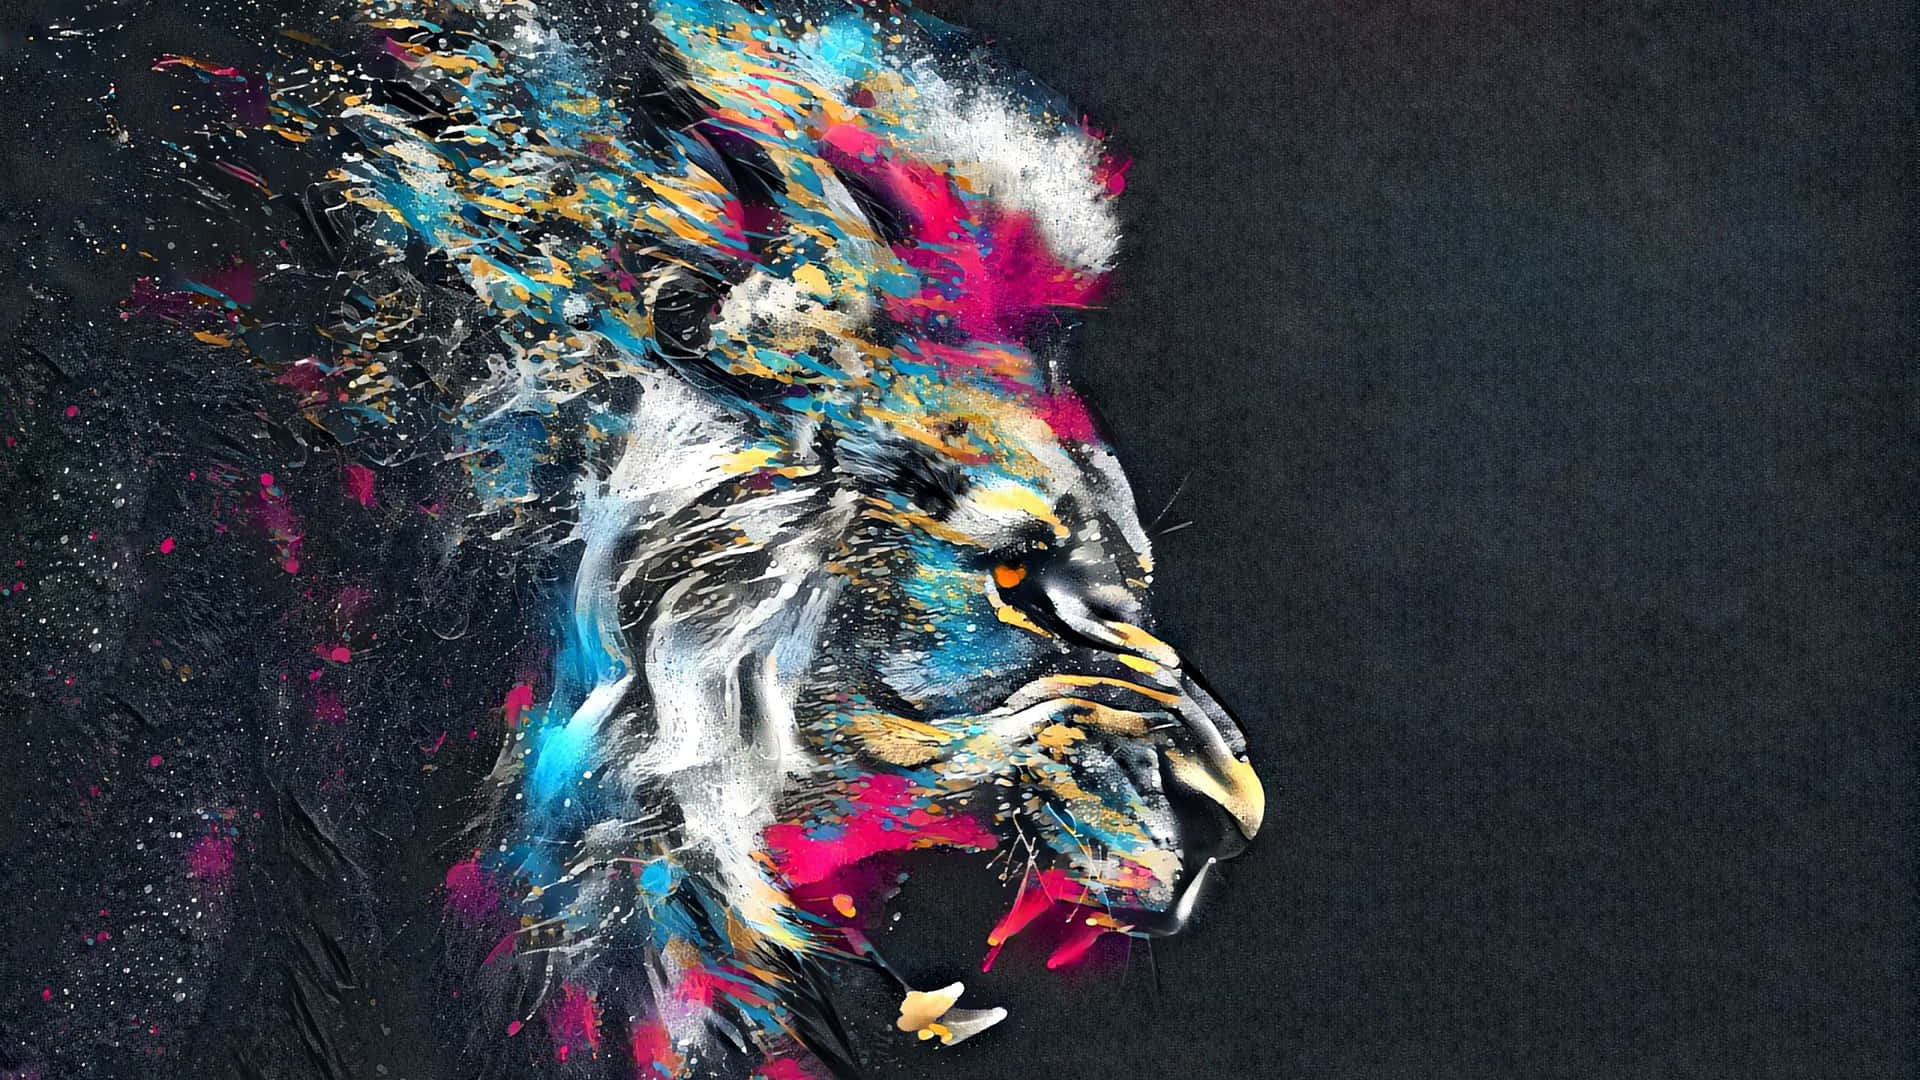 An intimidating Roaring Lion Wallpaper